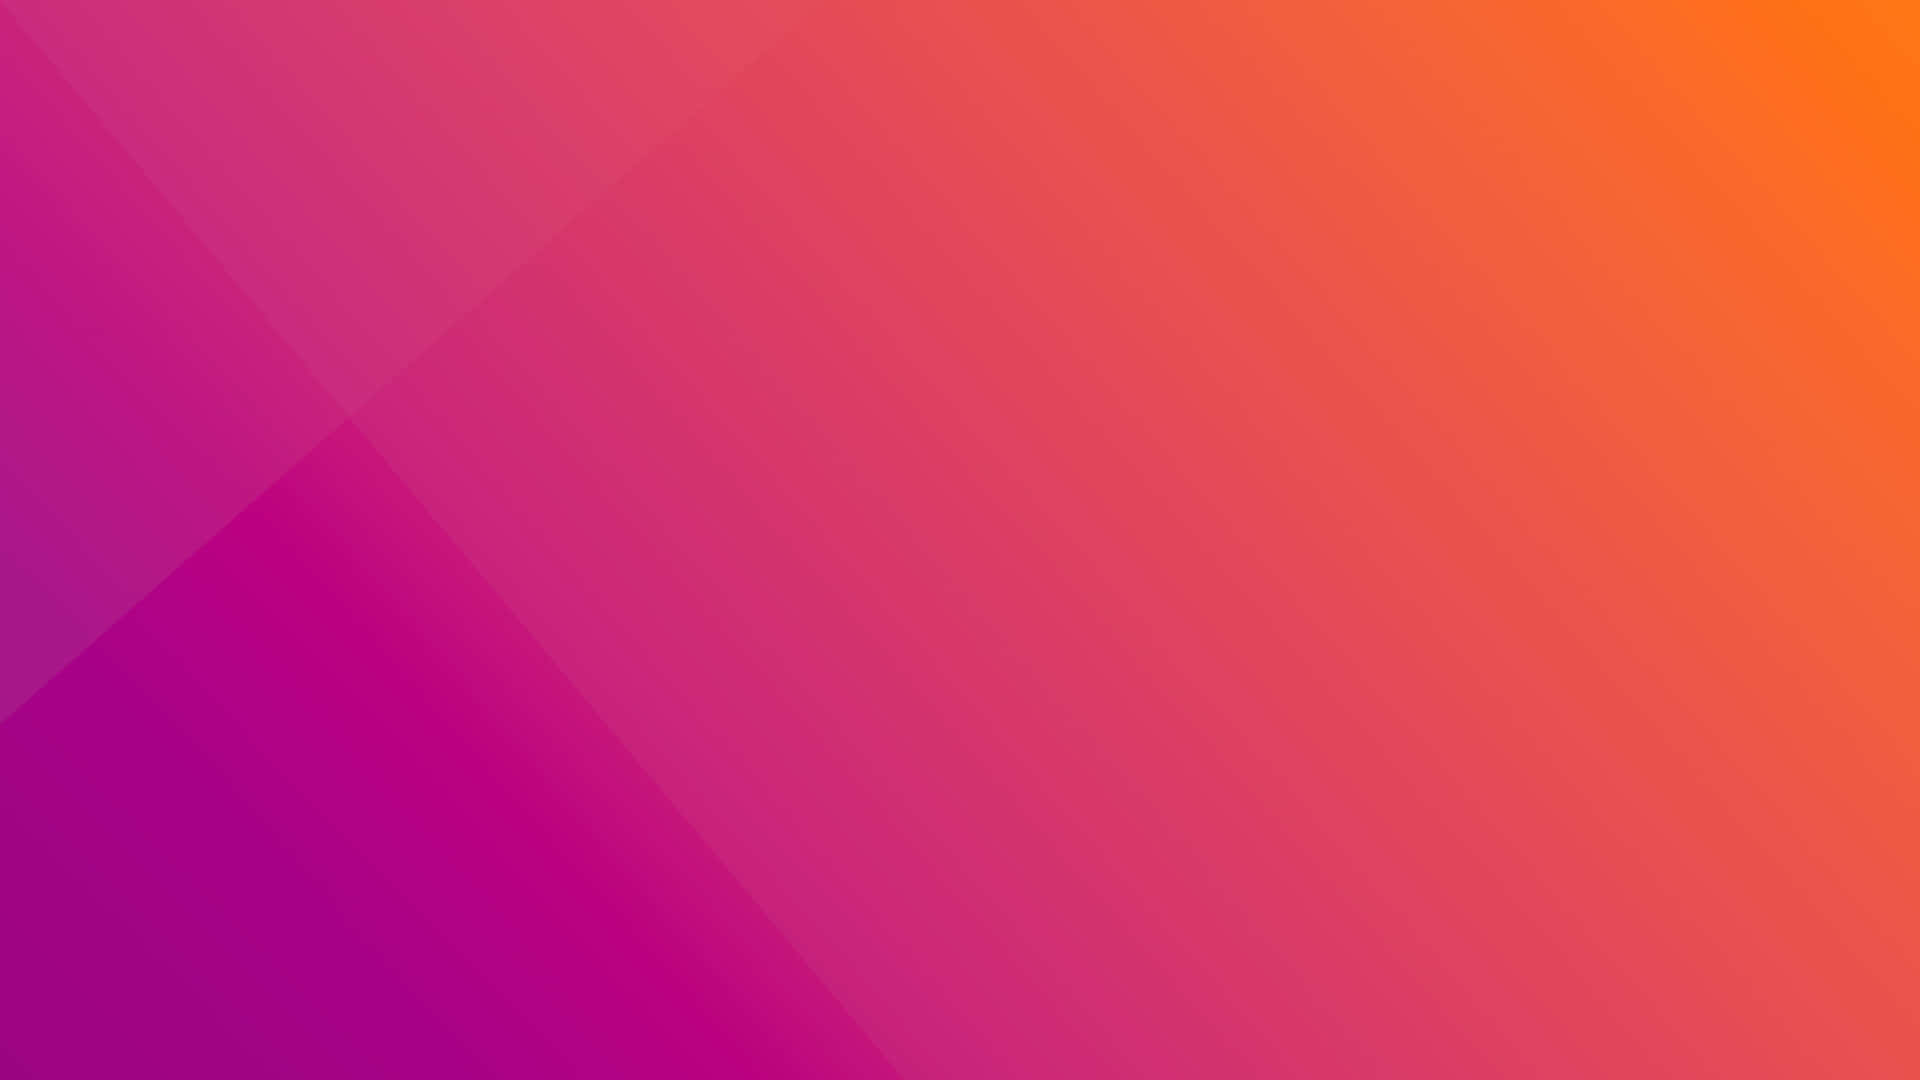 Ubuntu4k: Disfruta De La Belleza De Este Fondo De Pantalla 4k De Ubuntu. Fondo de pantalla